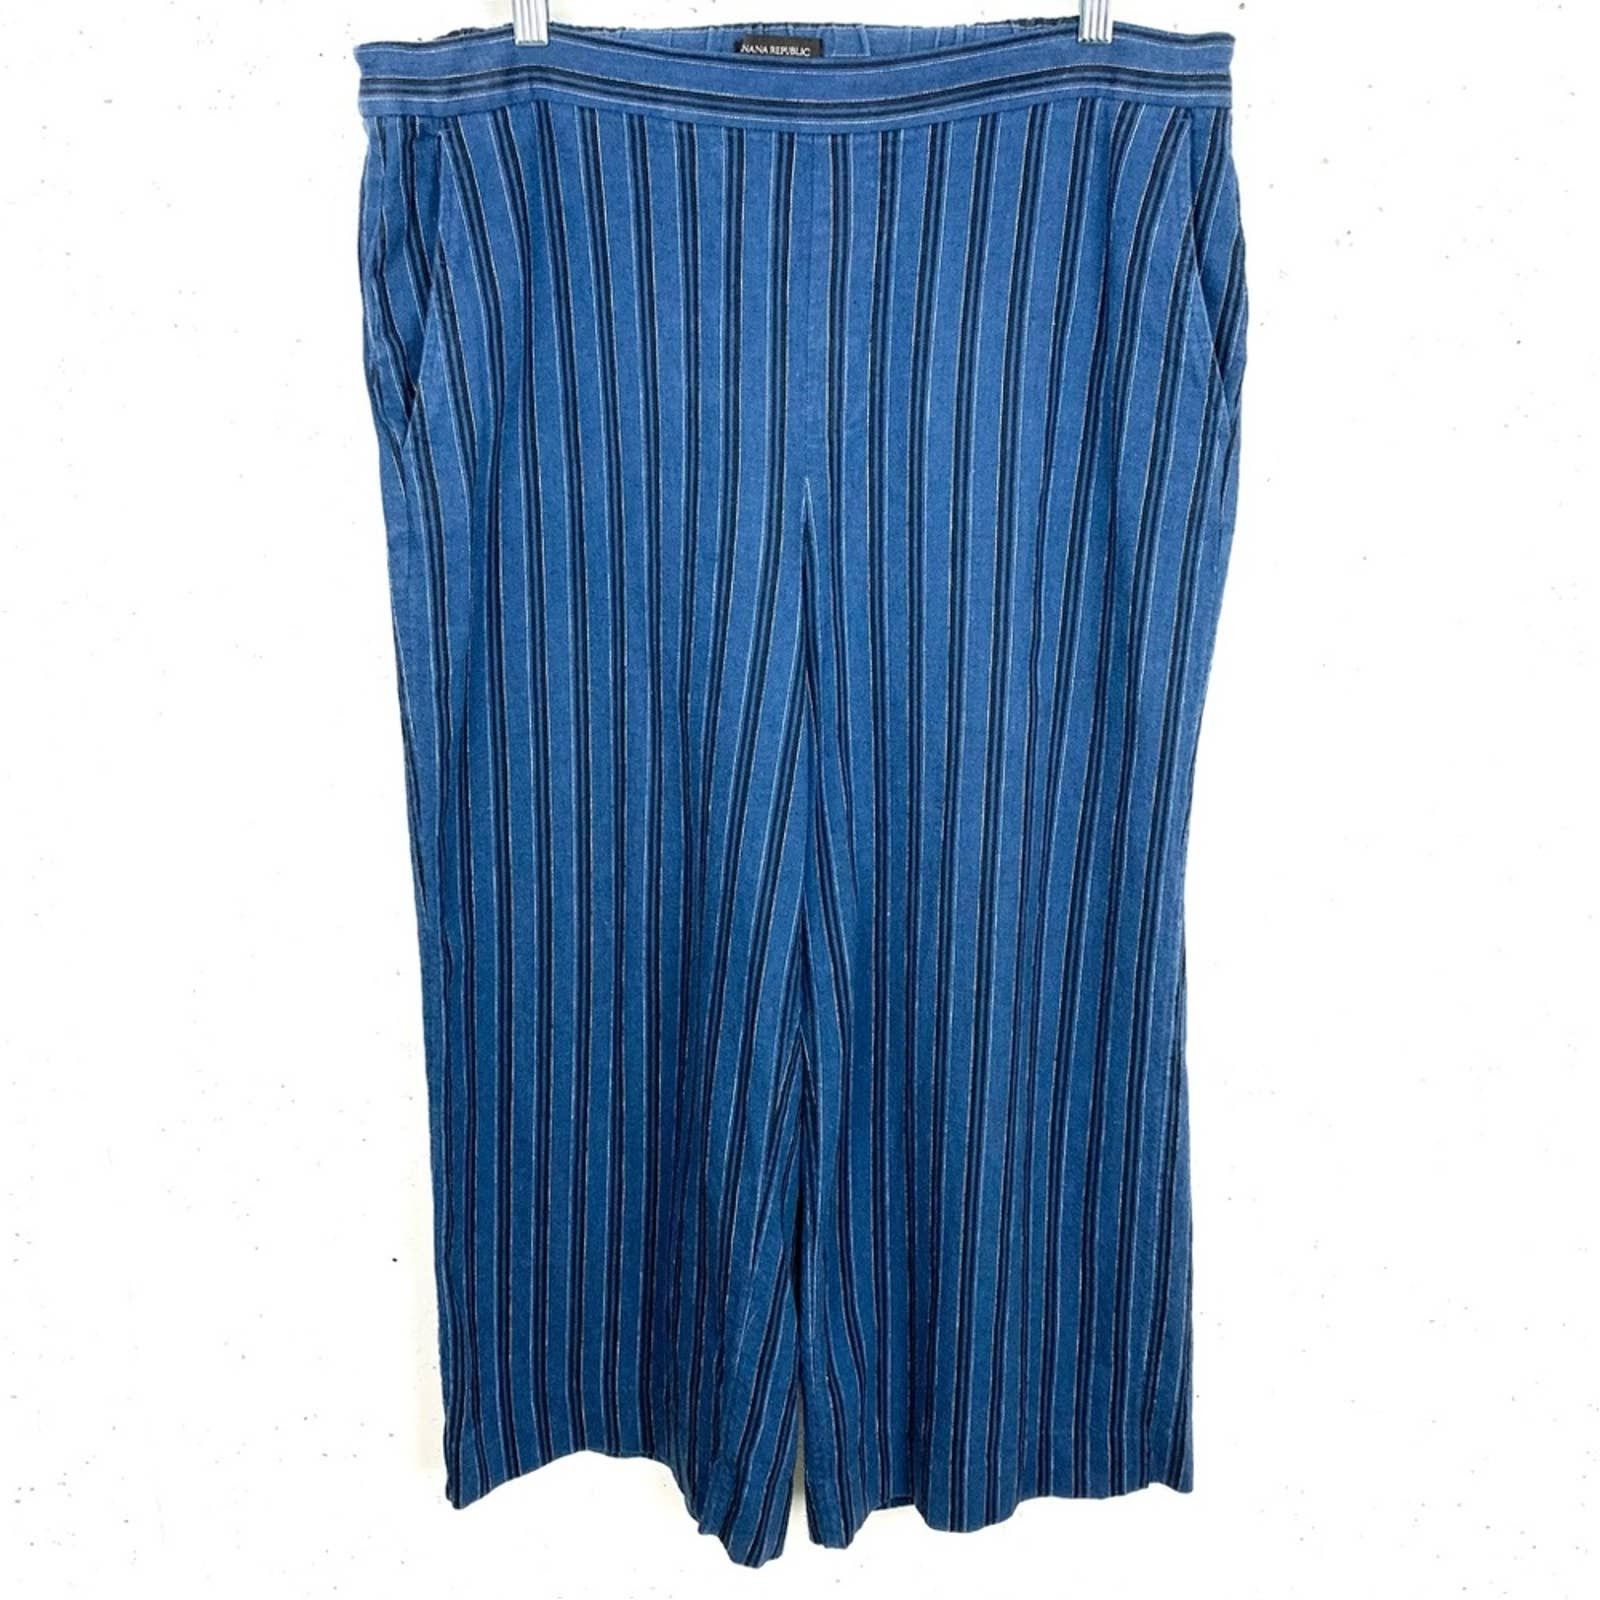 Banana Republic BANANA REPUBLIC Sloan Fit Blue Print Dress Pants - Size 8